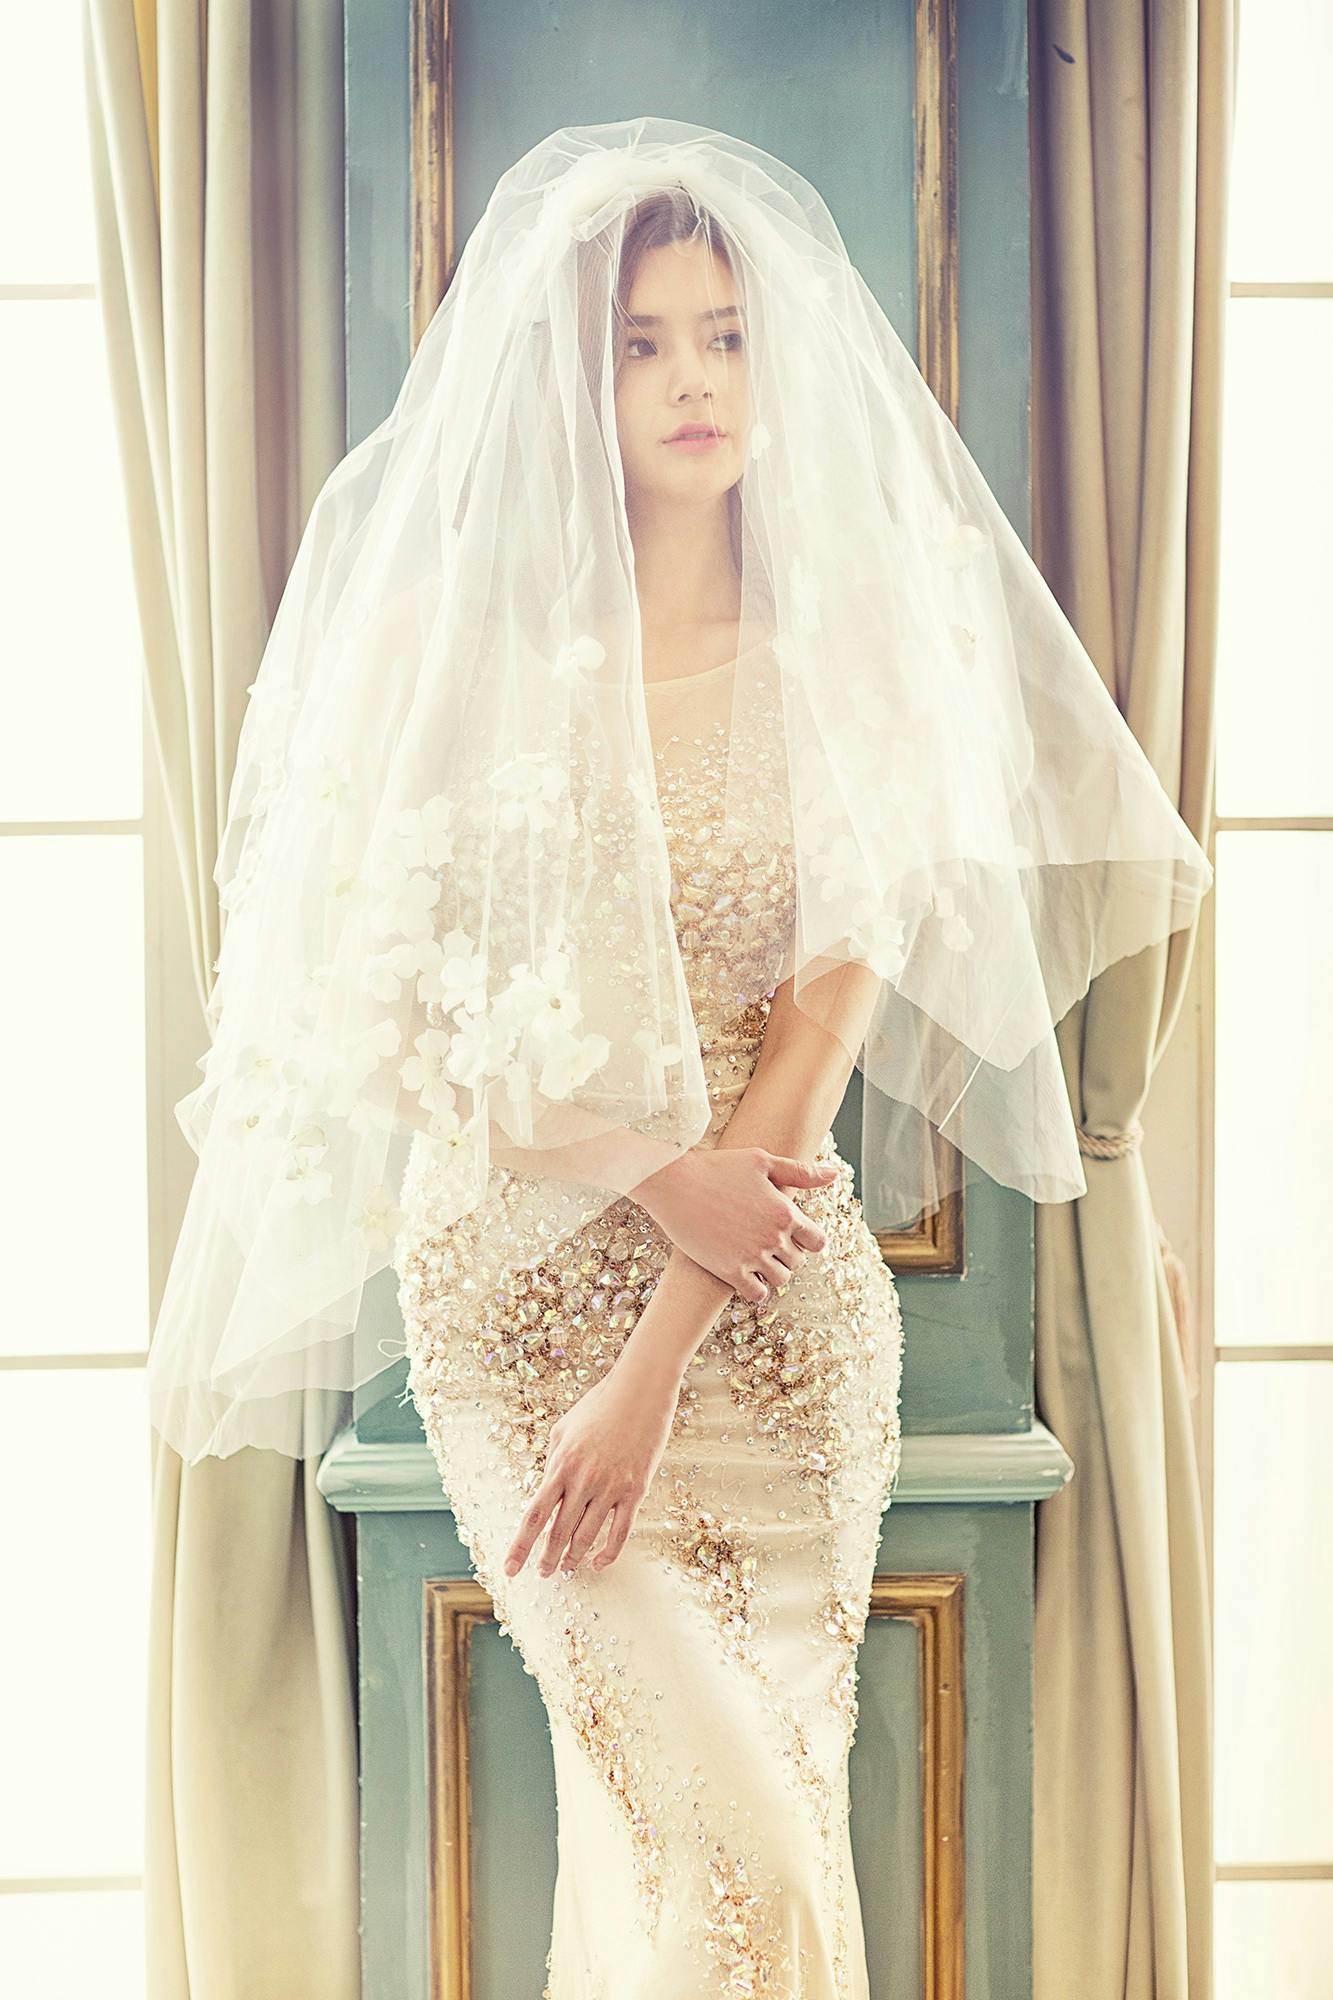 https://images.pexels.com/photos/157997/wedding-dresses-character-fashion-individuality-157997.jpeg